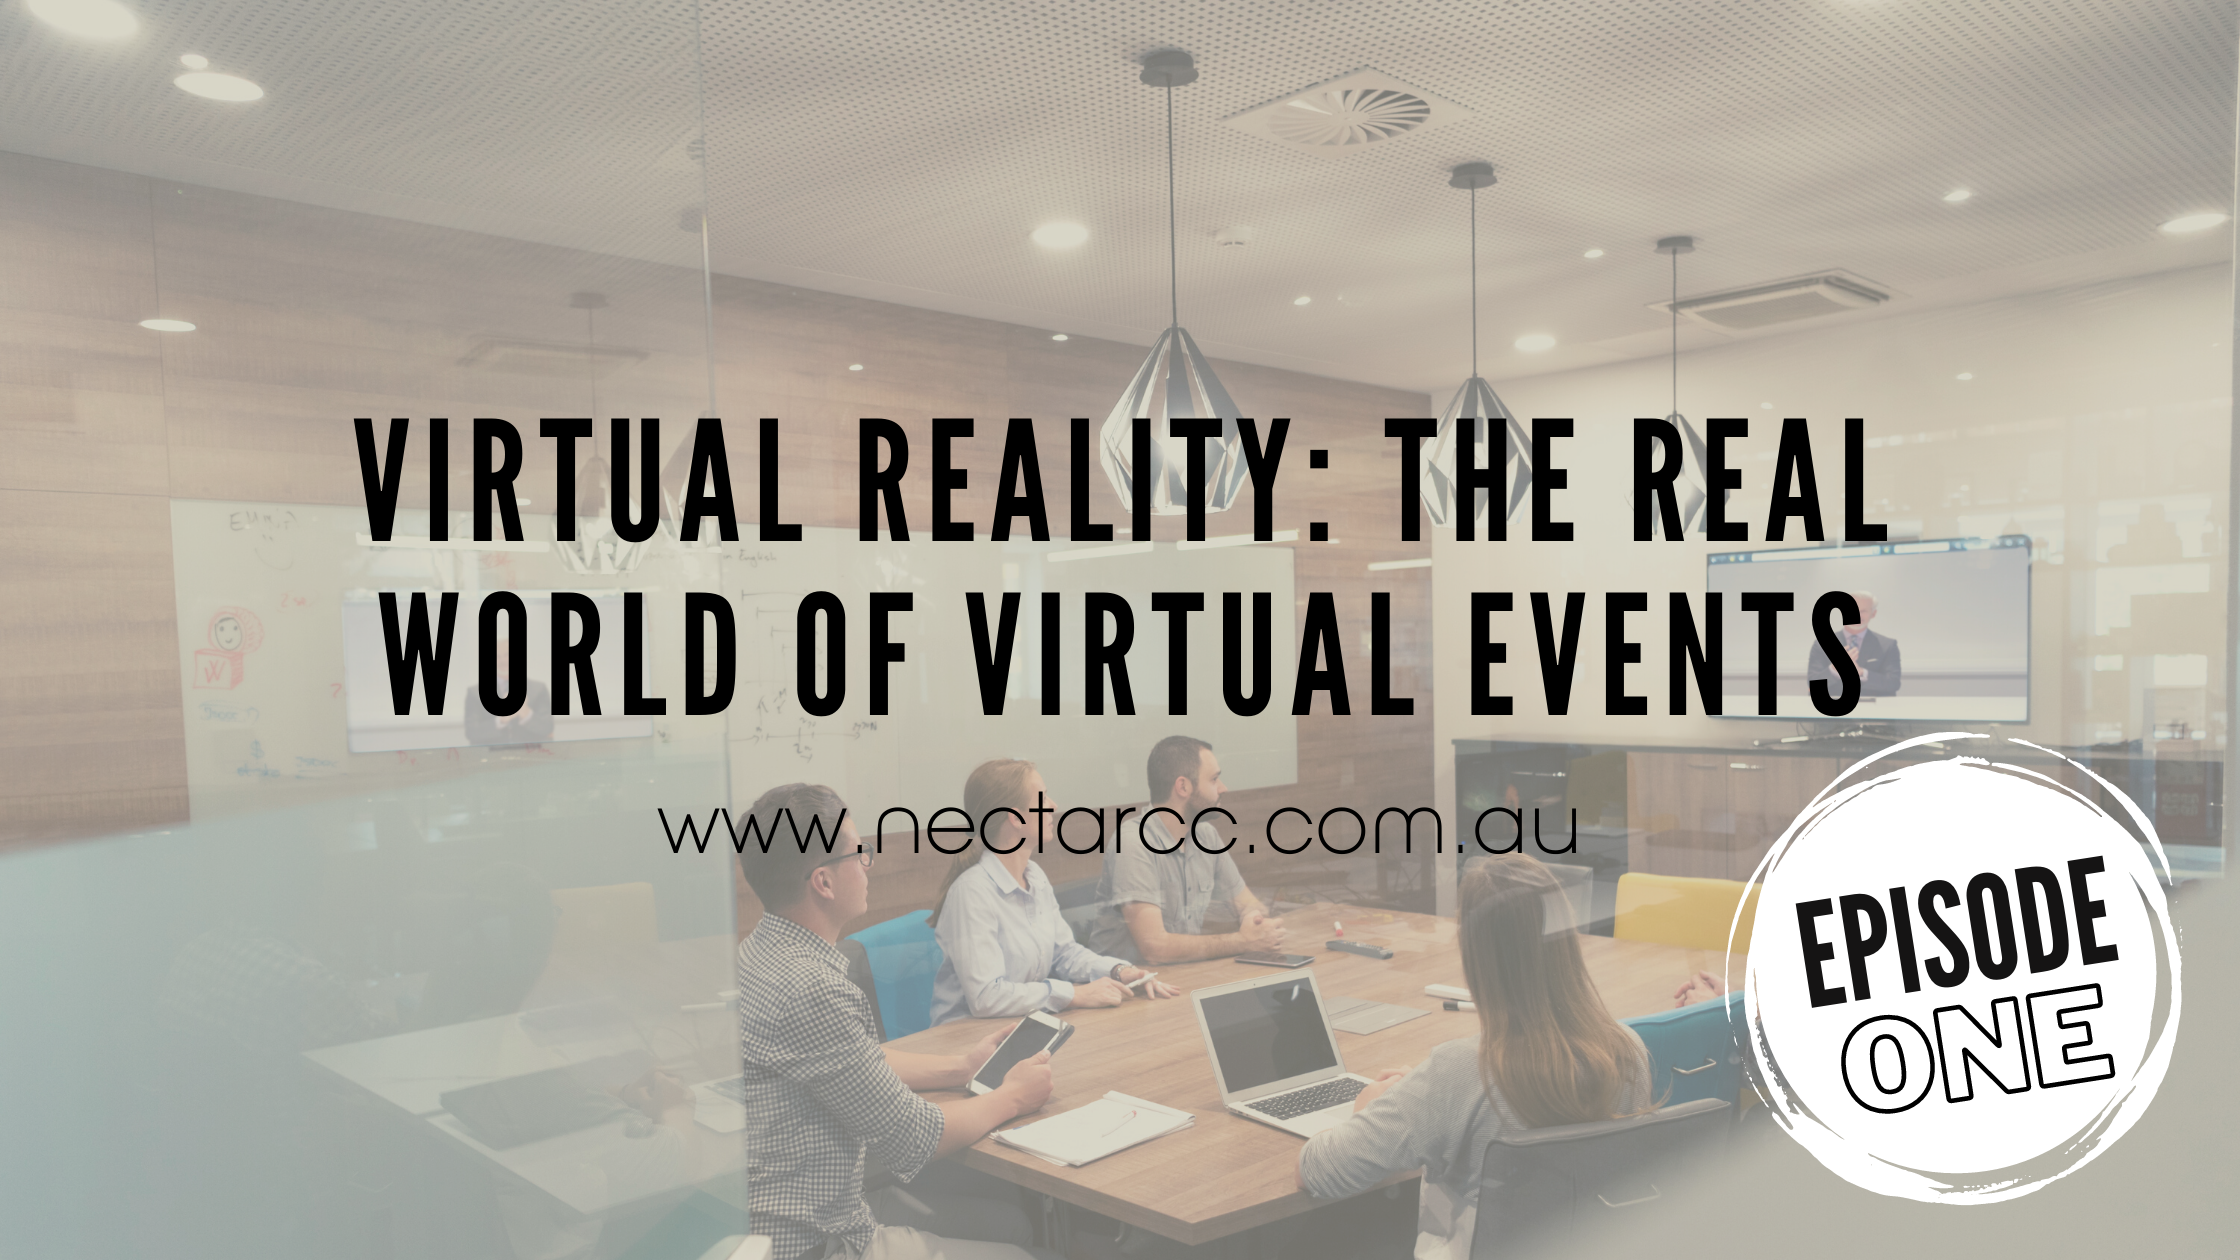 Virtual events